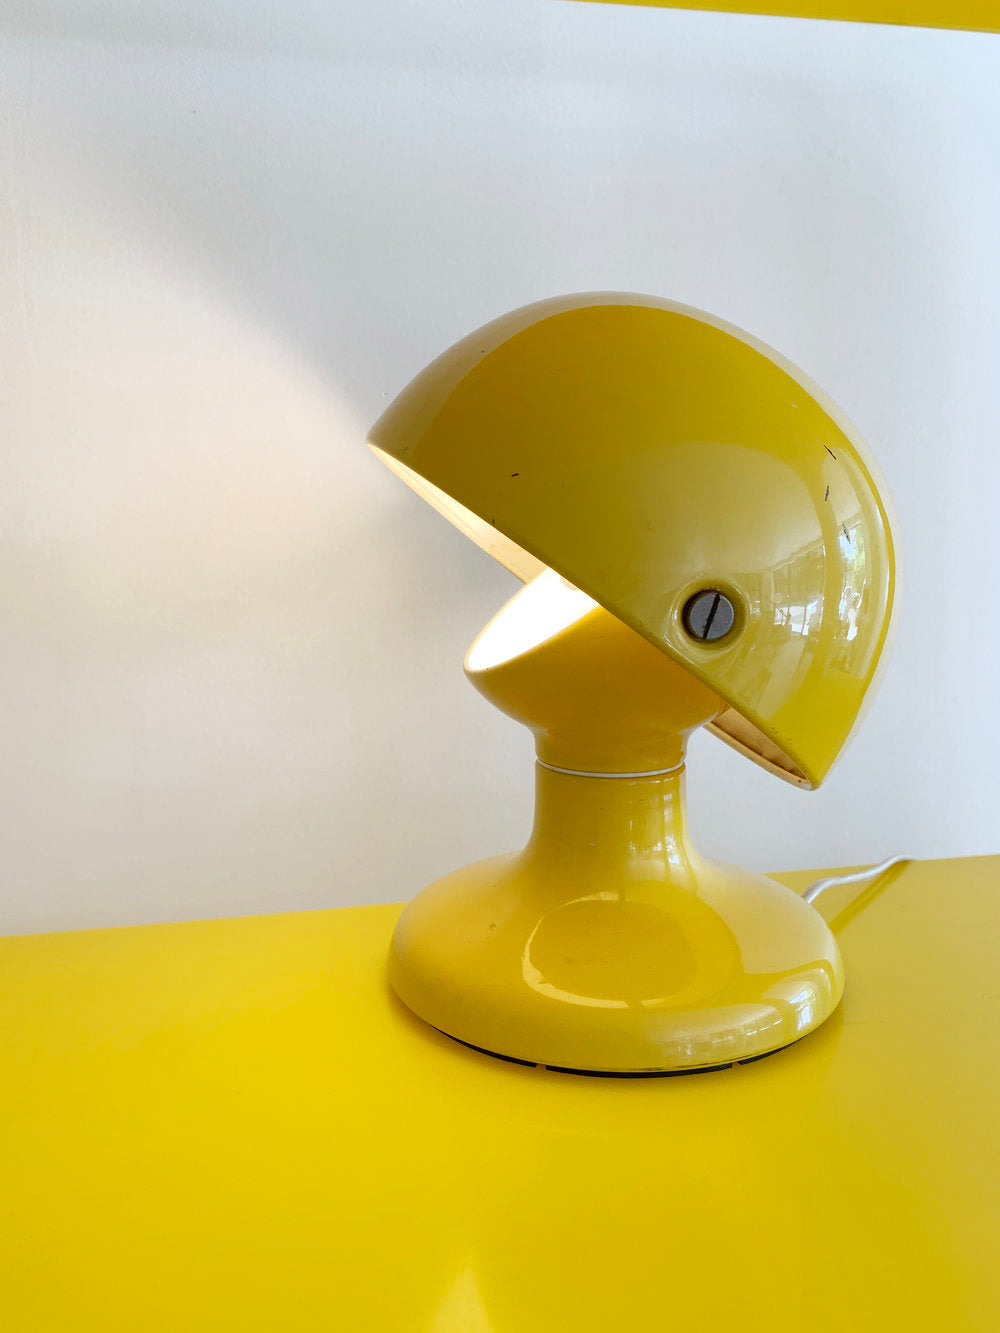 Rare Yellow Flos 1963 “Jucker” Lamp by Tobia Scarpa